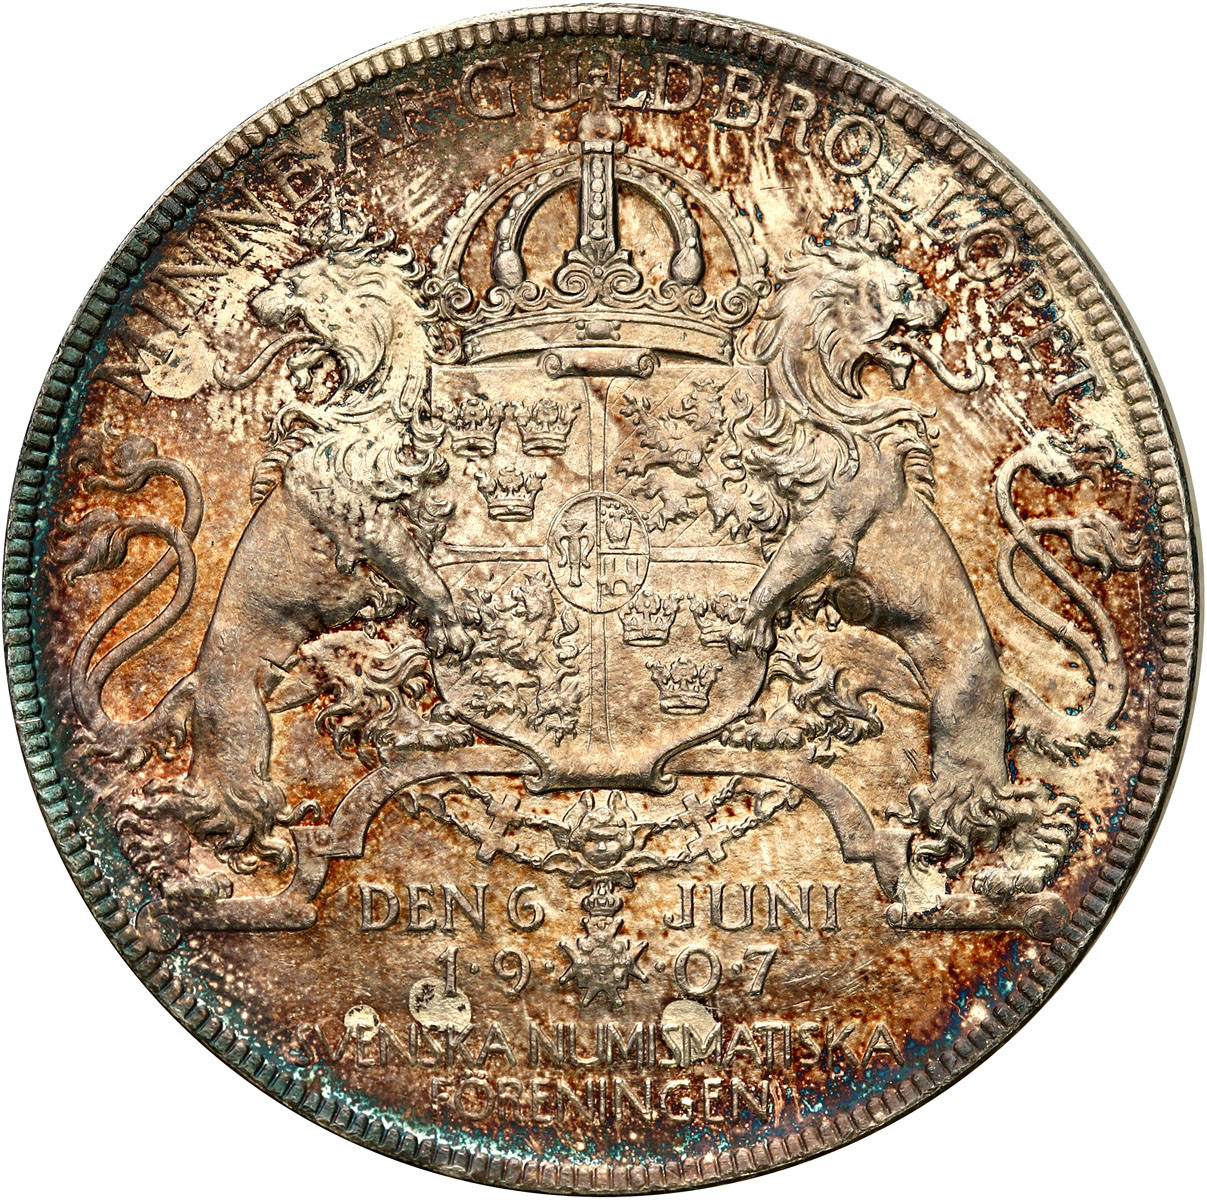 Szwecja. Medal Oscar II, 1907, srebro